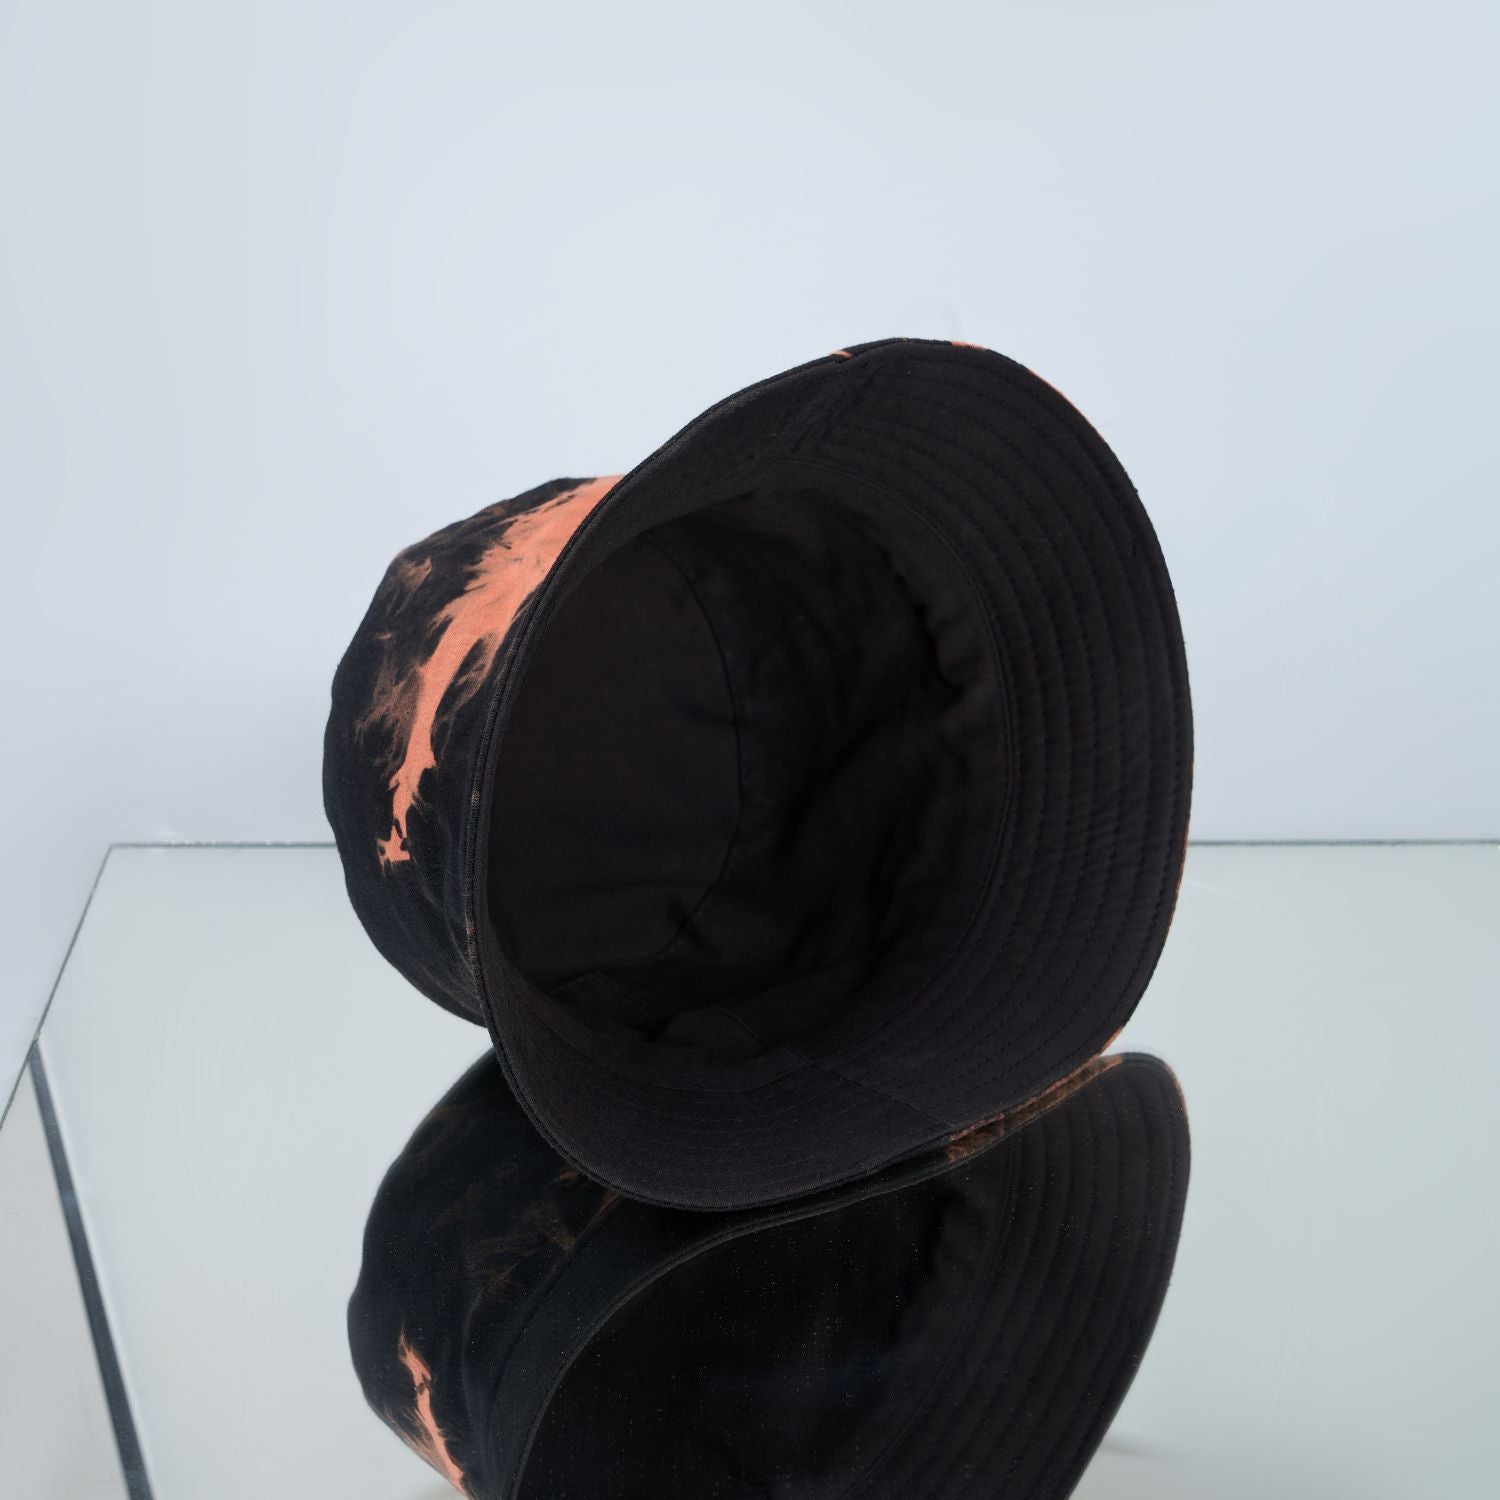 Black and orange colored, lightweight bucket hat for men, inside view.